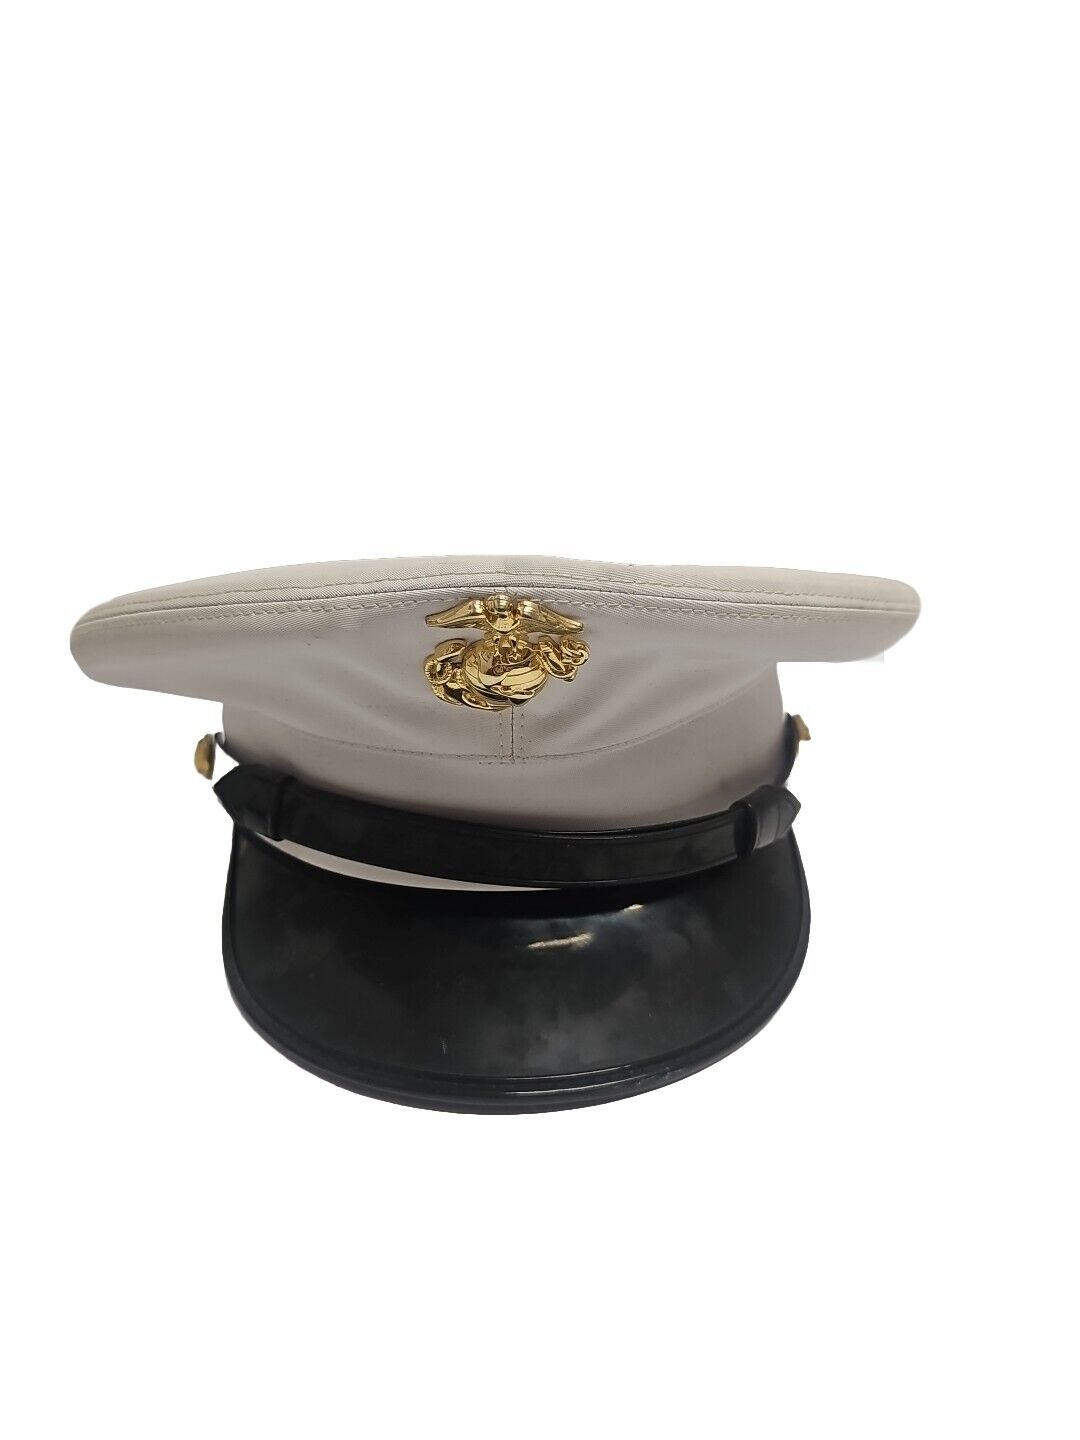 USMC Marine Corps Dress Blue Cover Hat With EGA Size 7.5